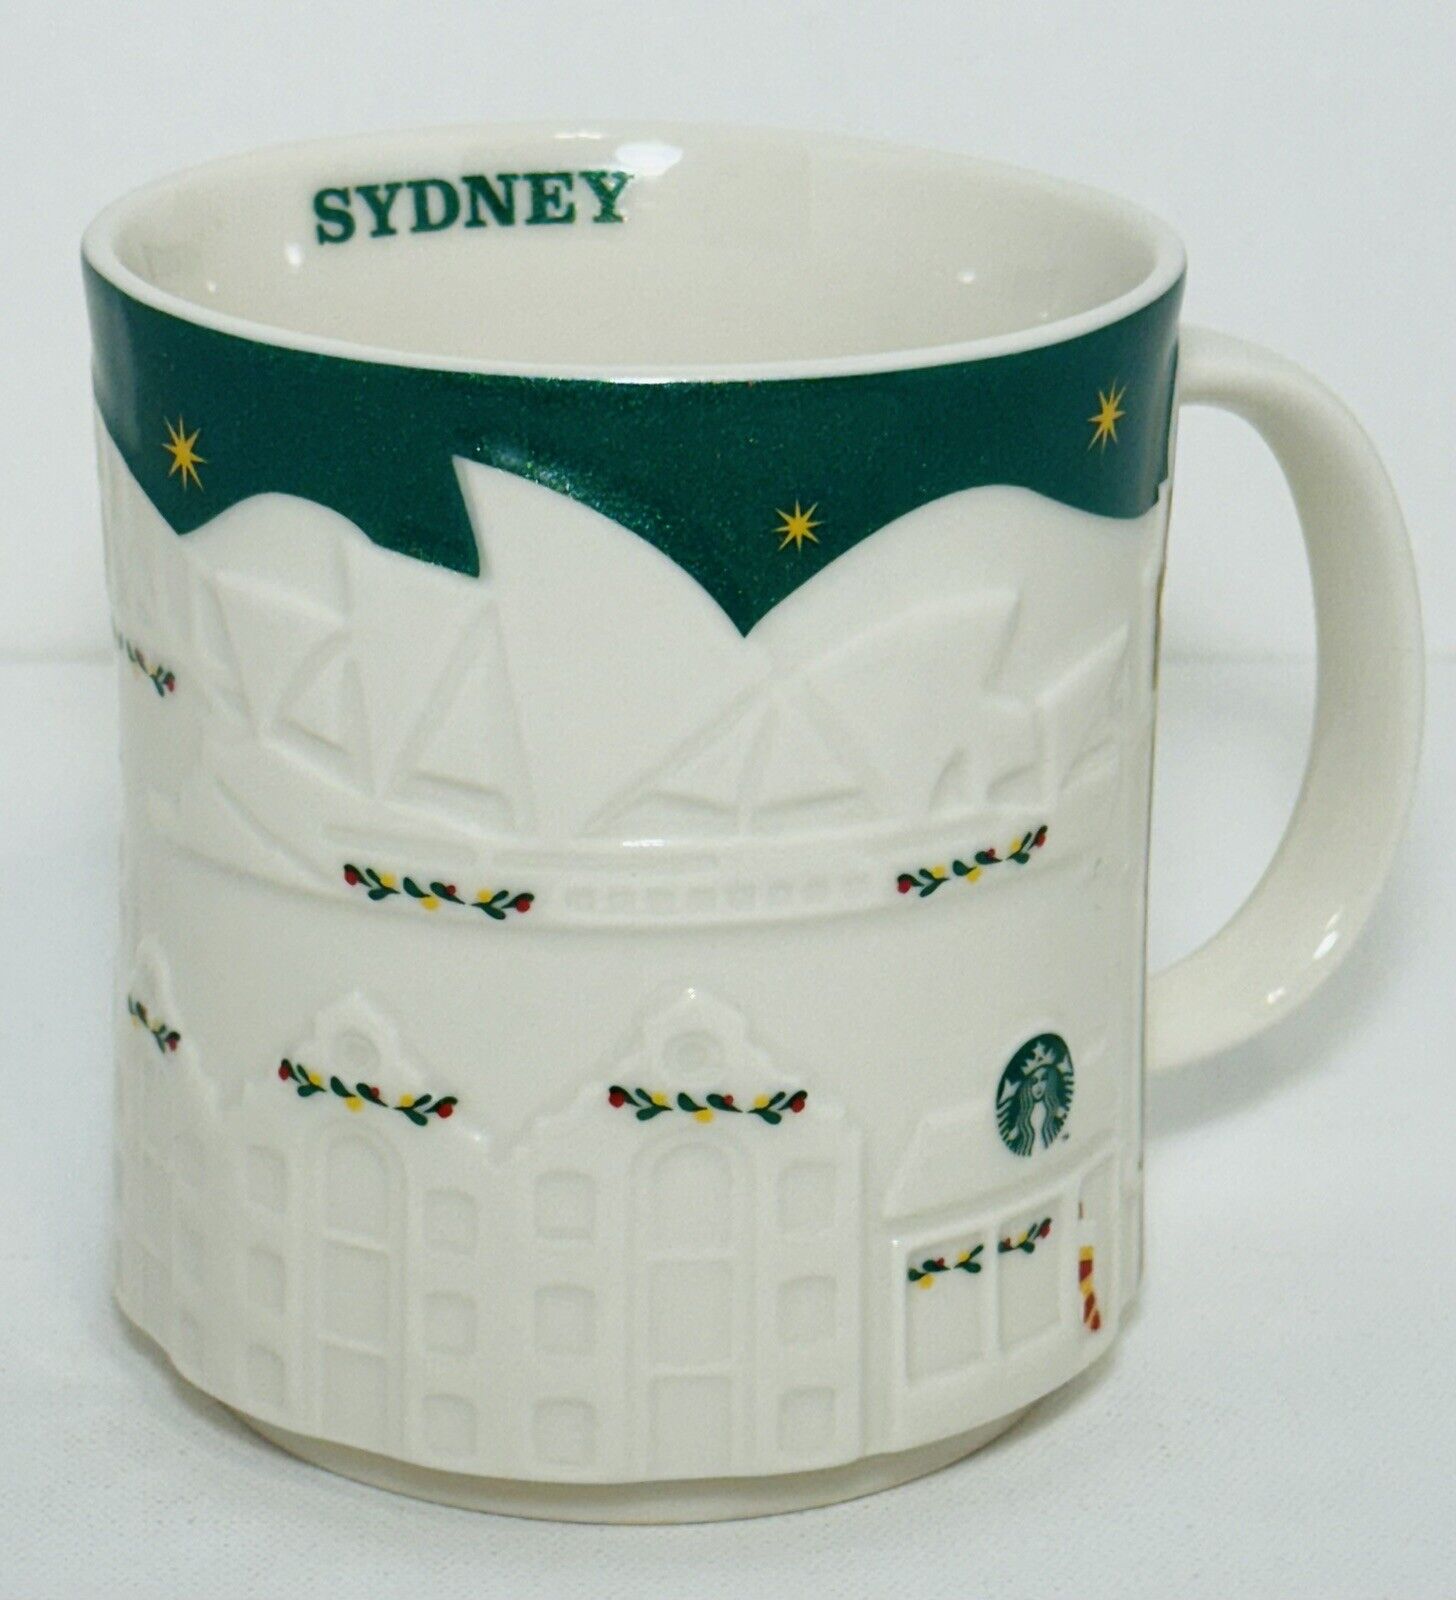 Starbucks 2016 Sydney Australia Holiday Coffee Mug Green 16oz NIB with all tags